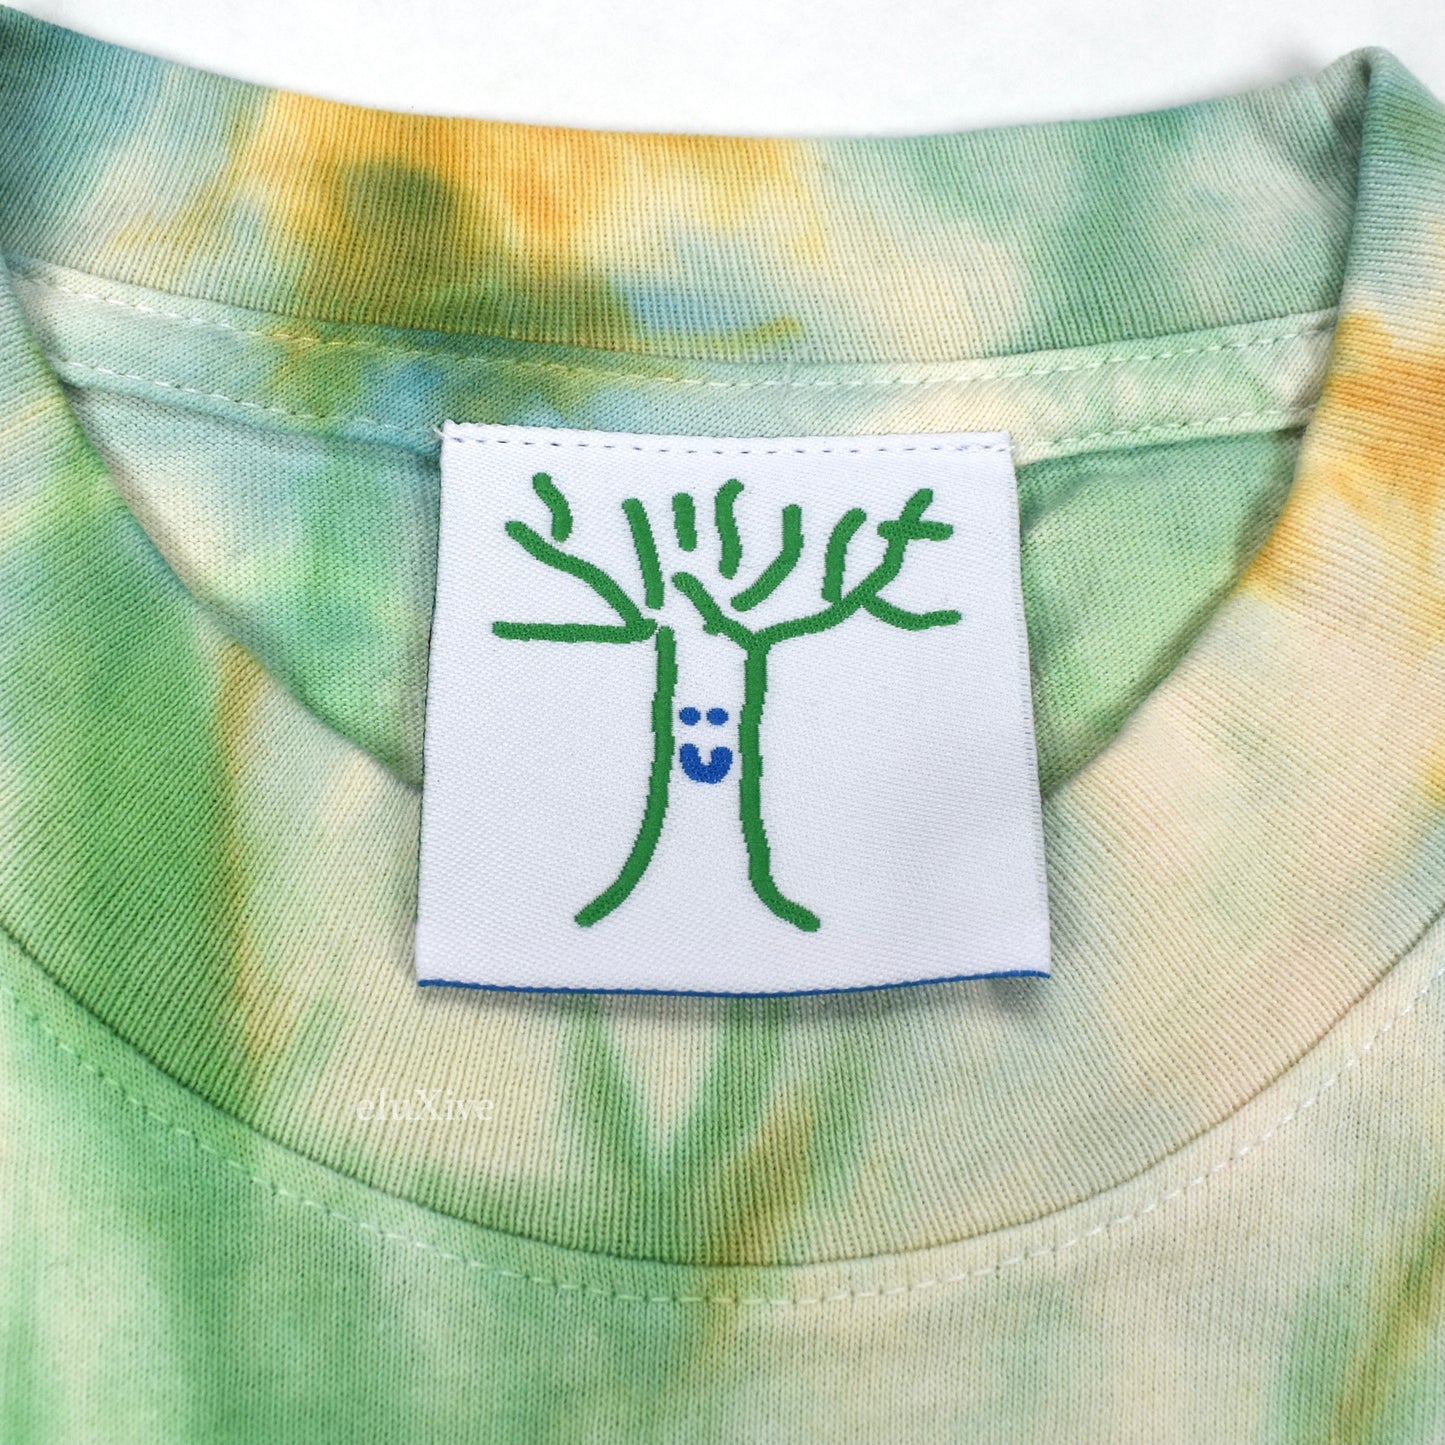 Online Ceramics - Find Heaven Everywhere Tie-Dye T-Shirt (Green/Yellow)